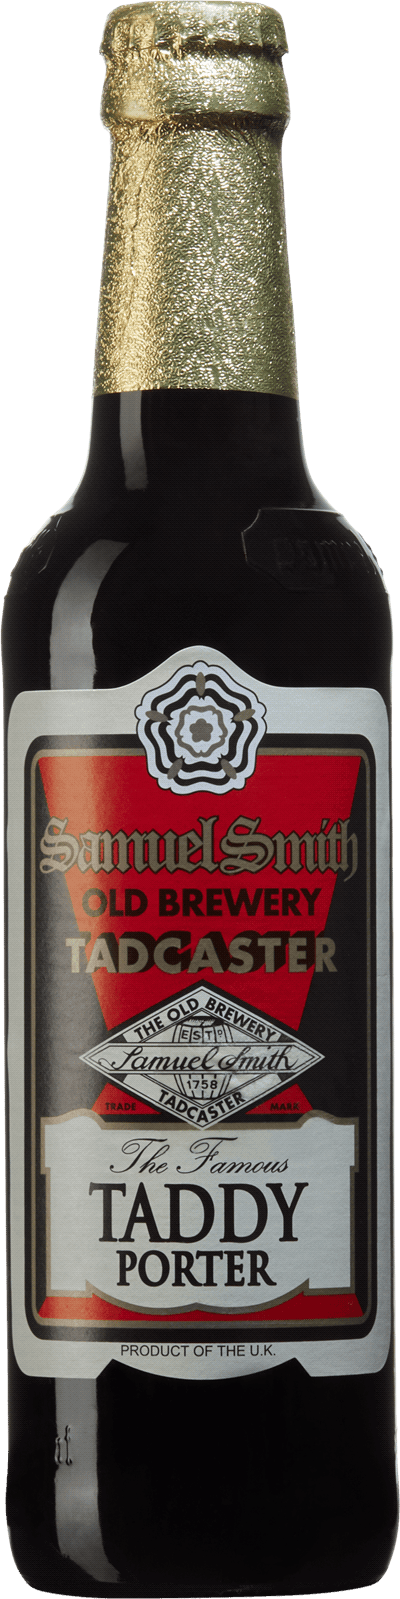 Samuel Smith The Famous Taddy Porter